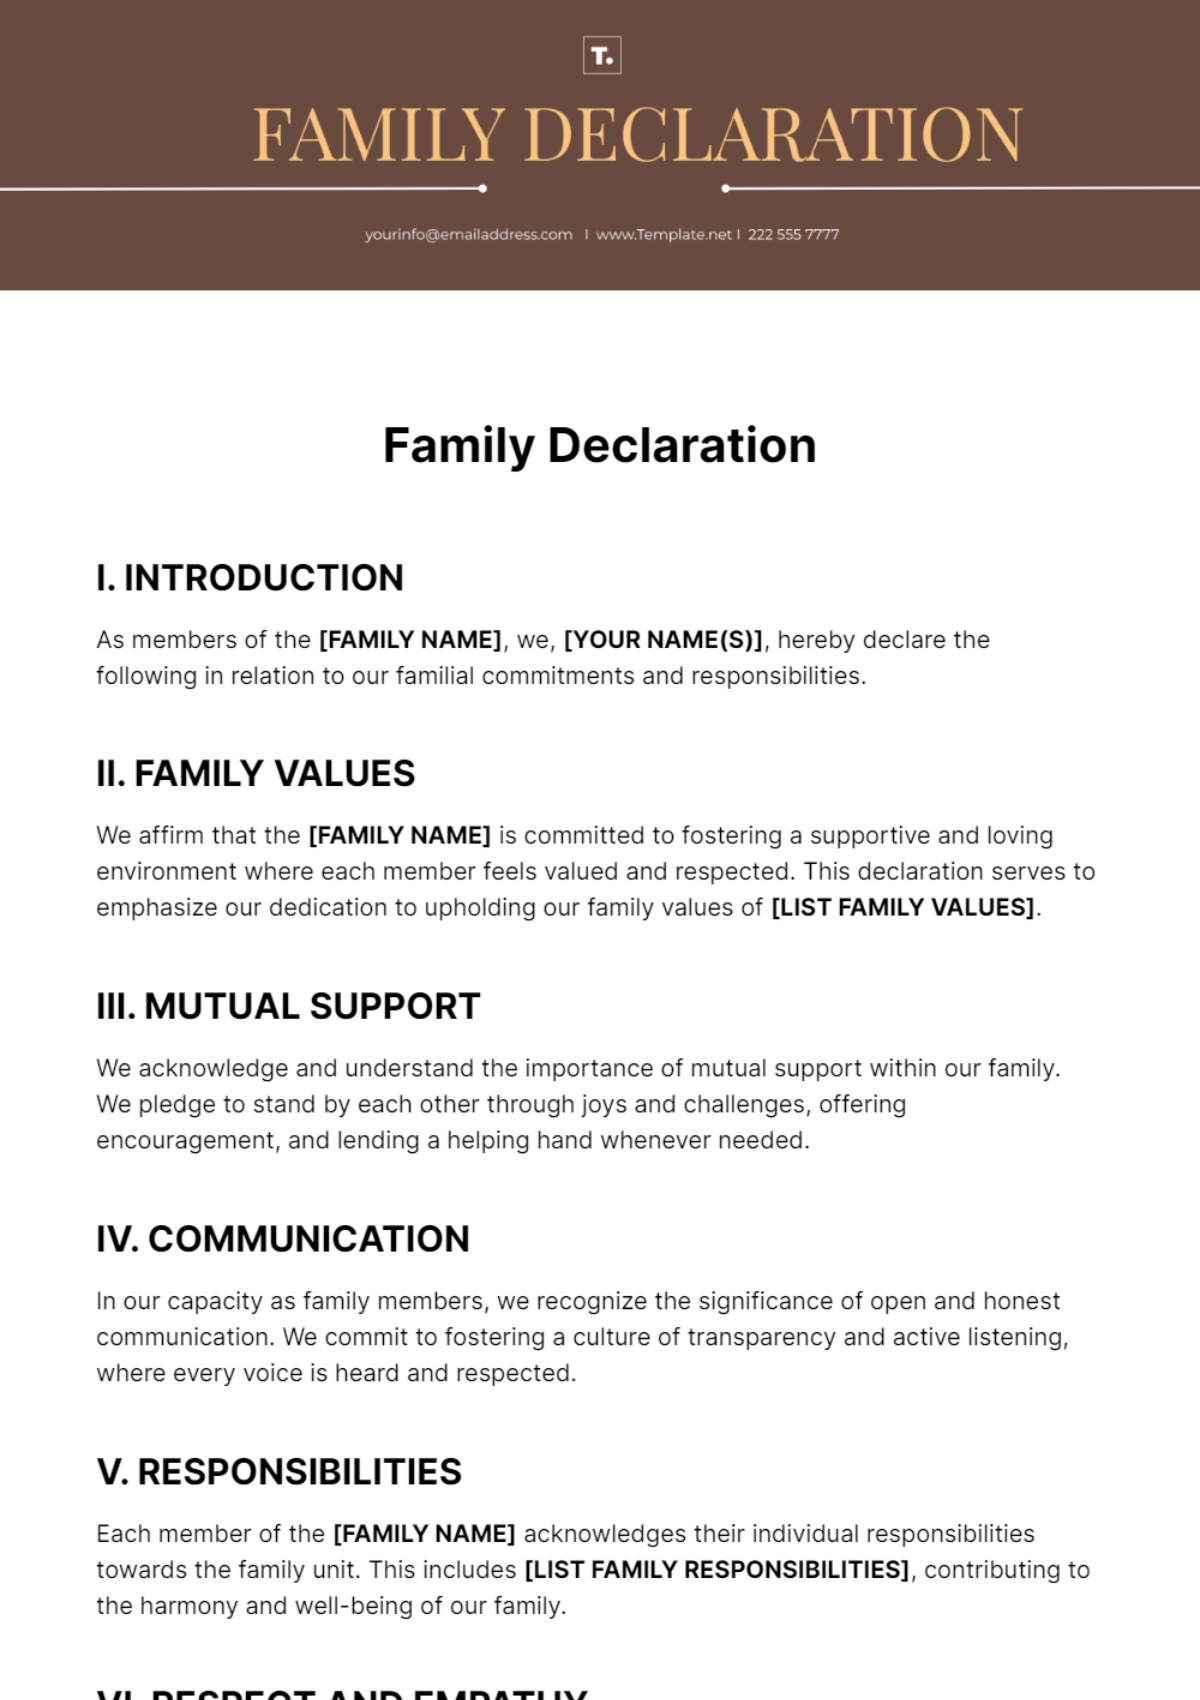 Family Declaration Template